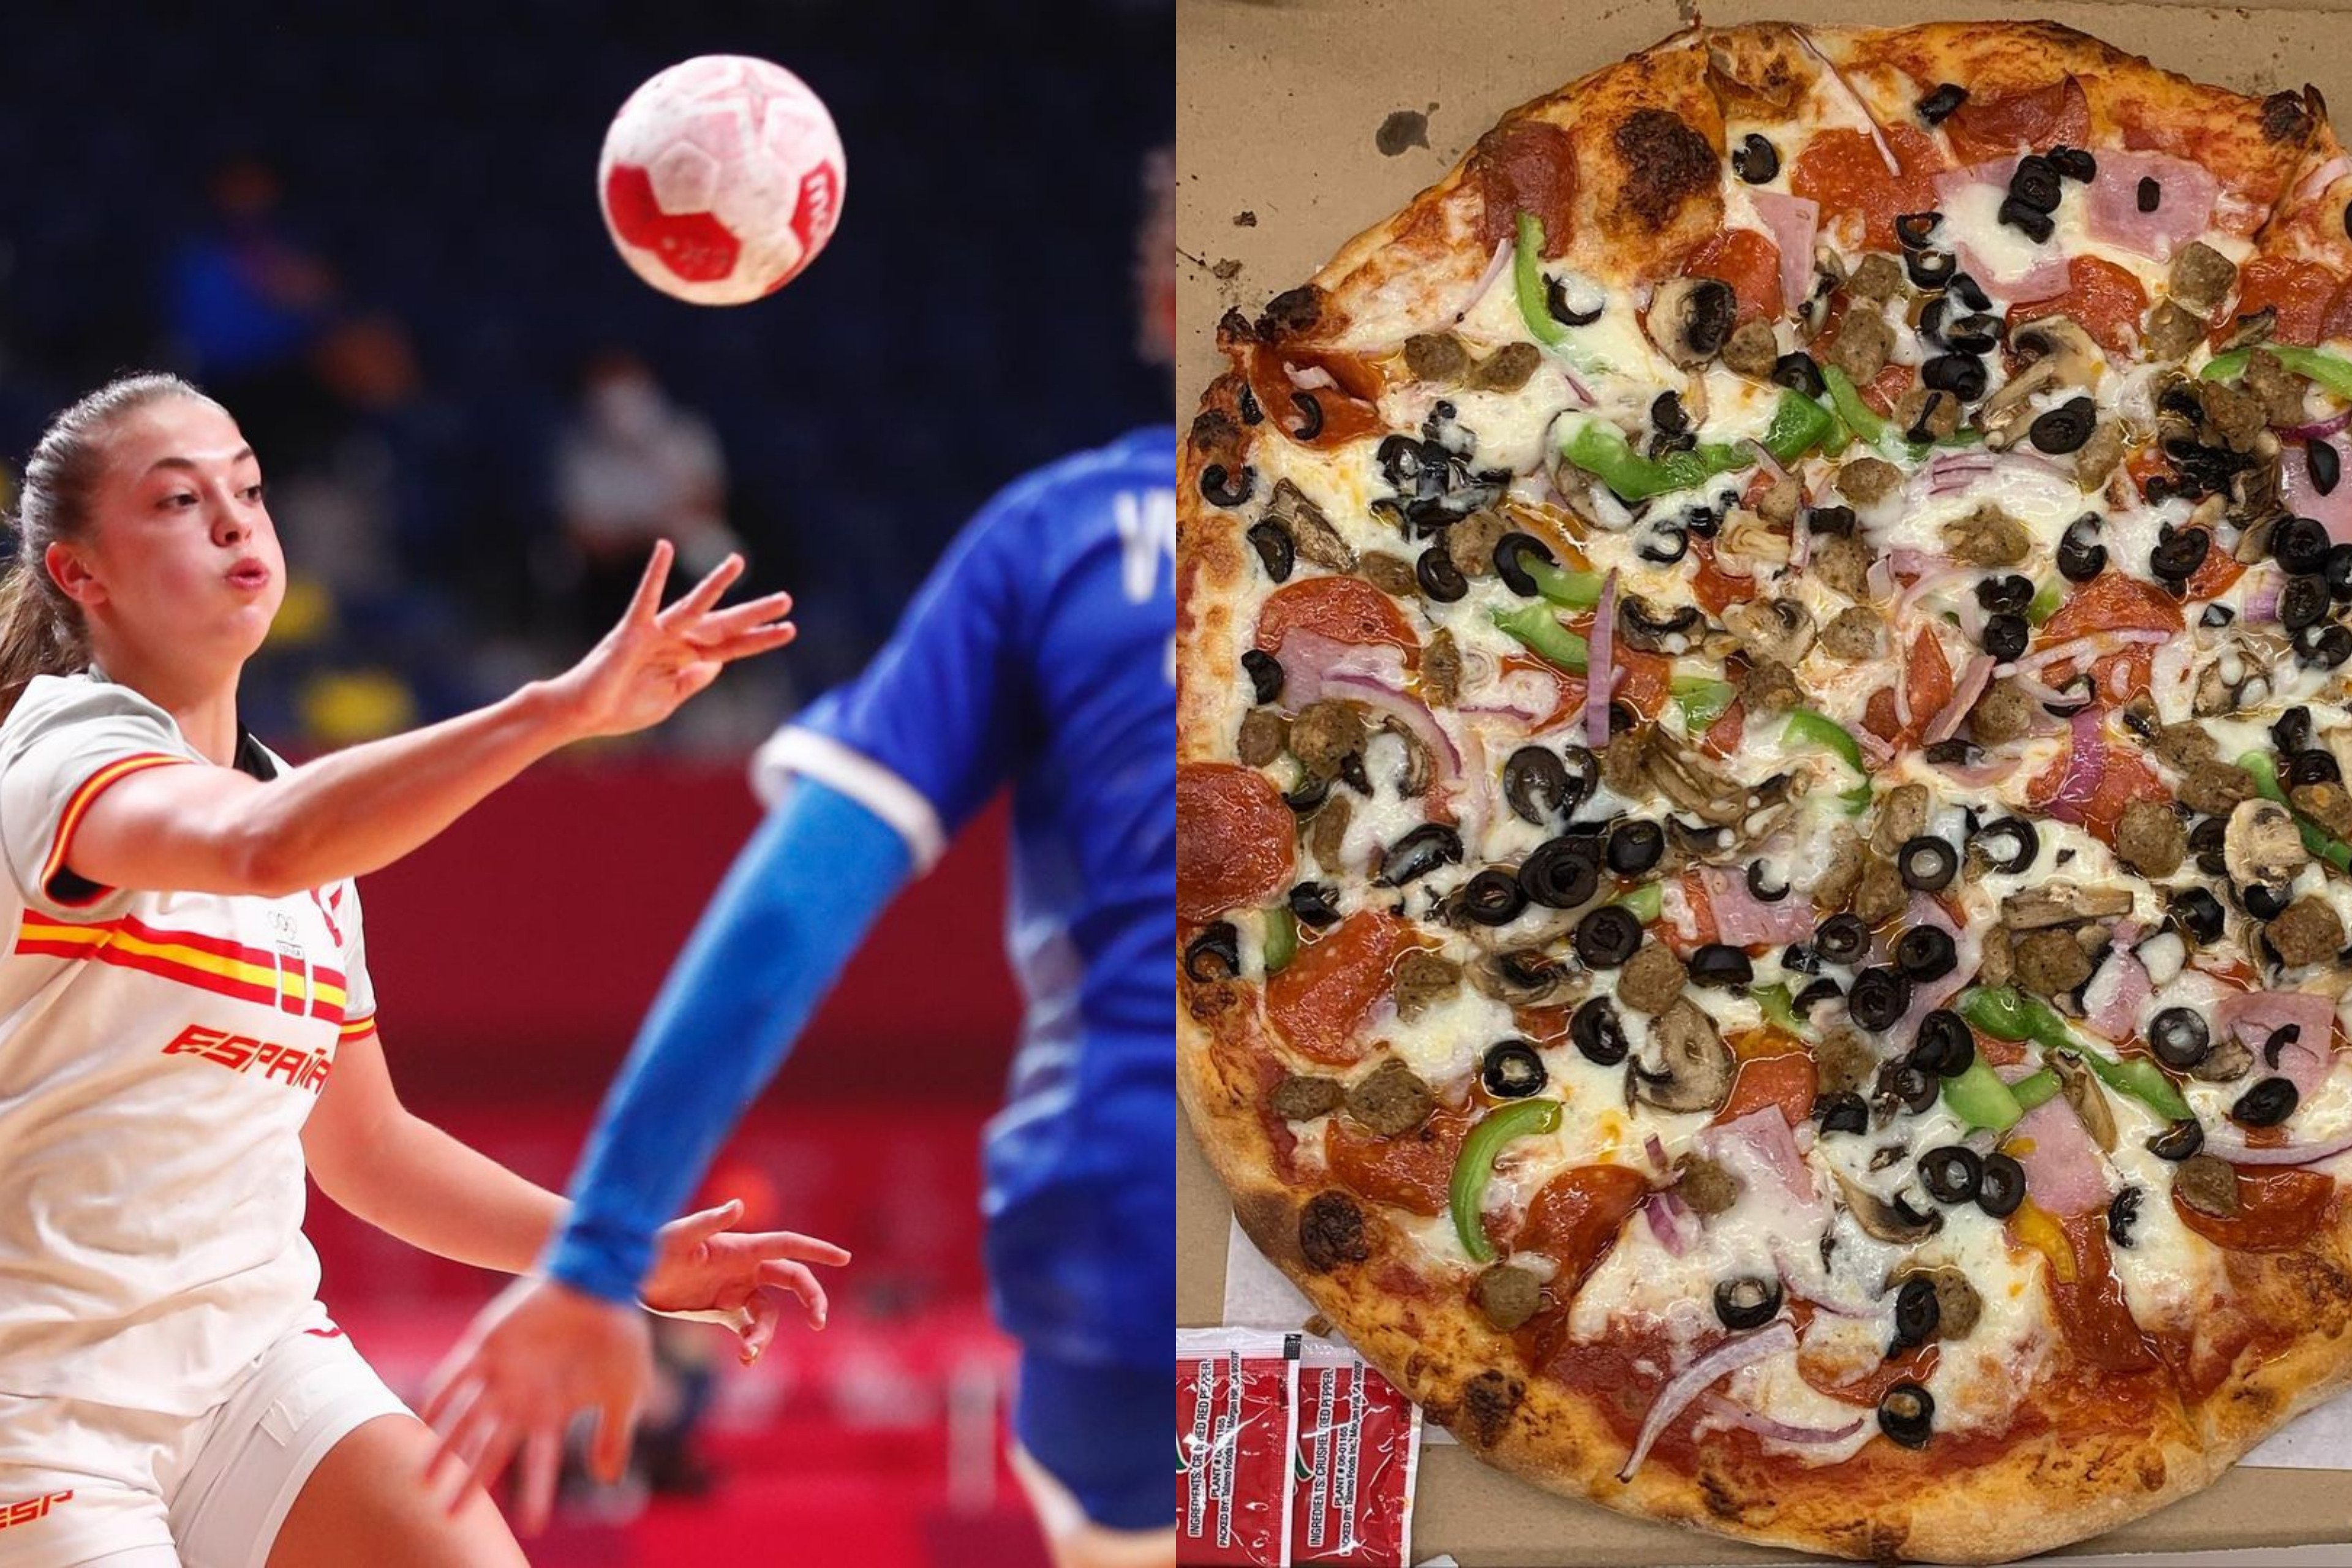 Handball player alongside the Works Pizza | Source: Instagram - Instagram